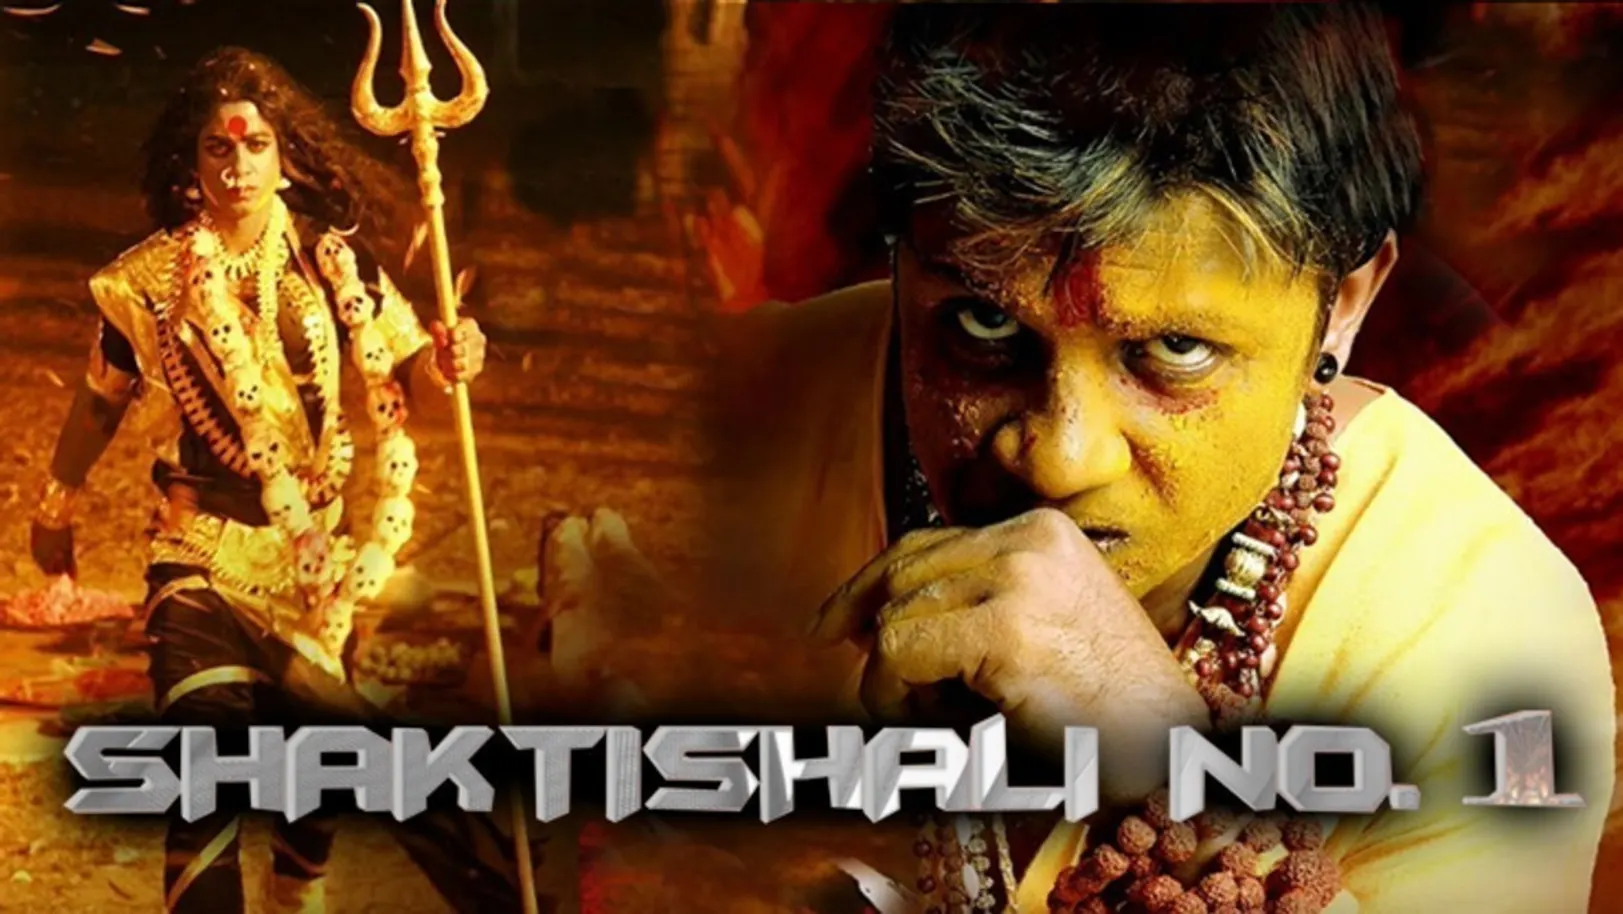 Shaktishali No.1 Movie